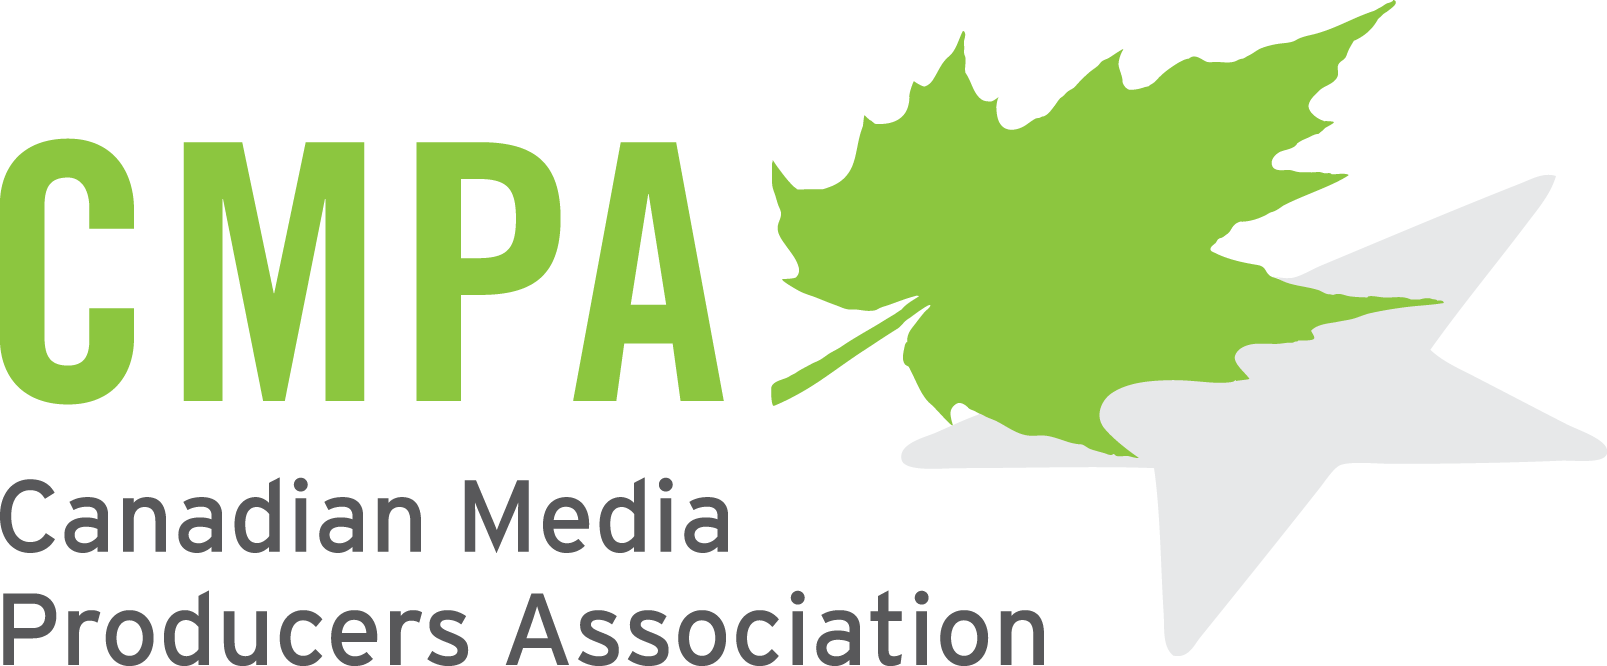 CMPA_logo2015_col.png